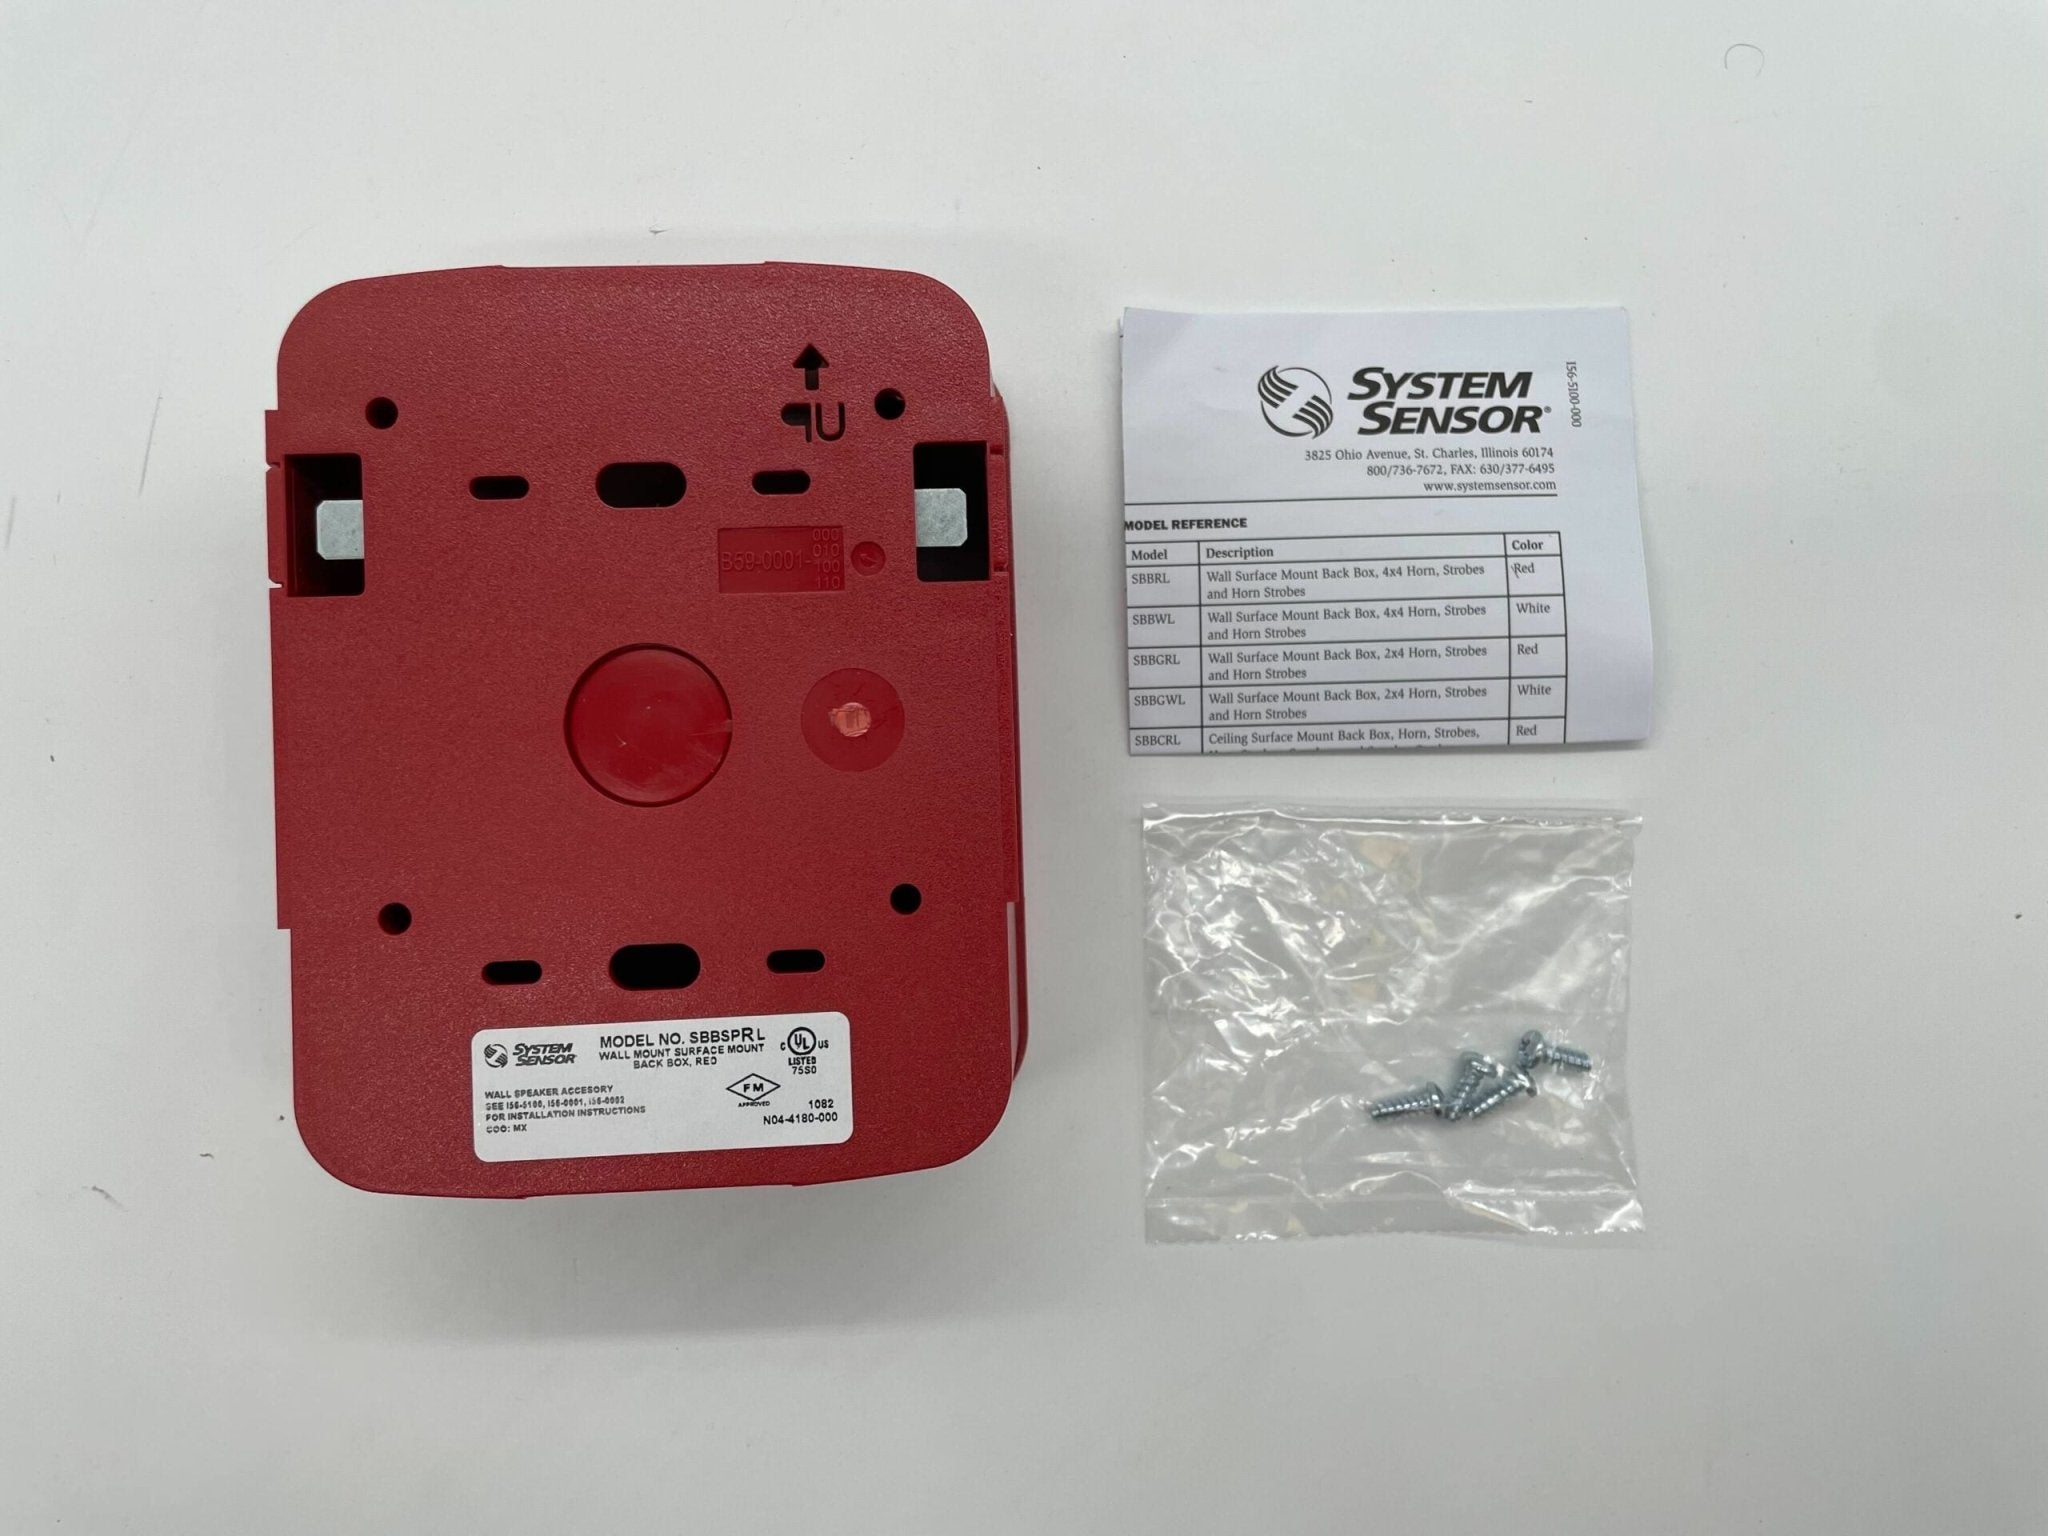 System Sensor SBBSPRL - The Fire Alarm Supplier